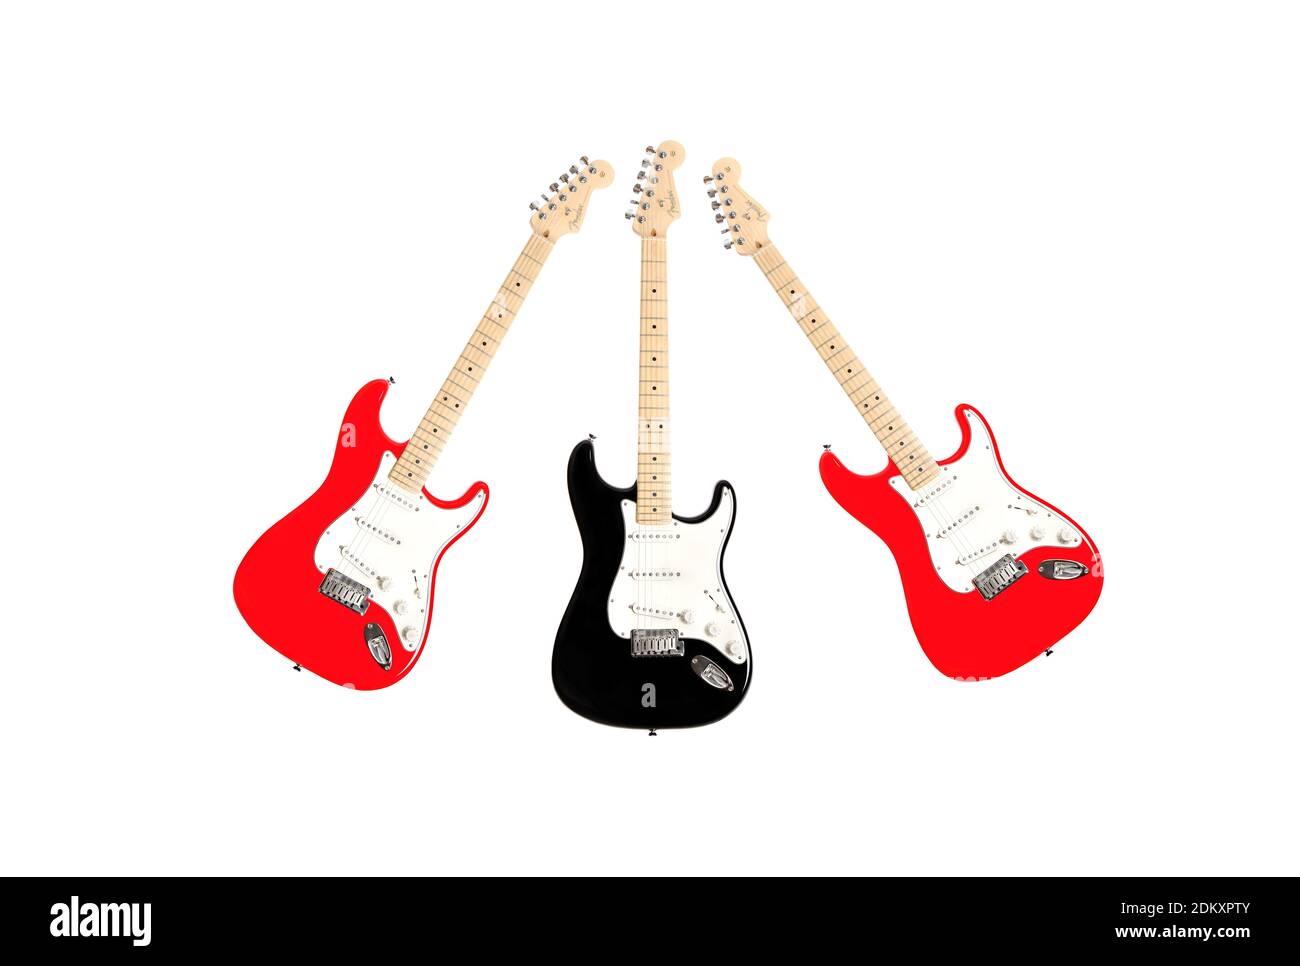 Strat - Fender Stratocaster electric guitars Stock Photo